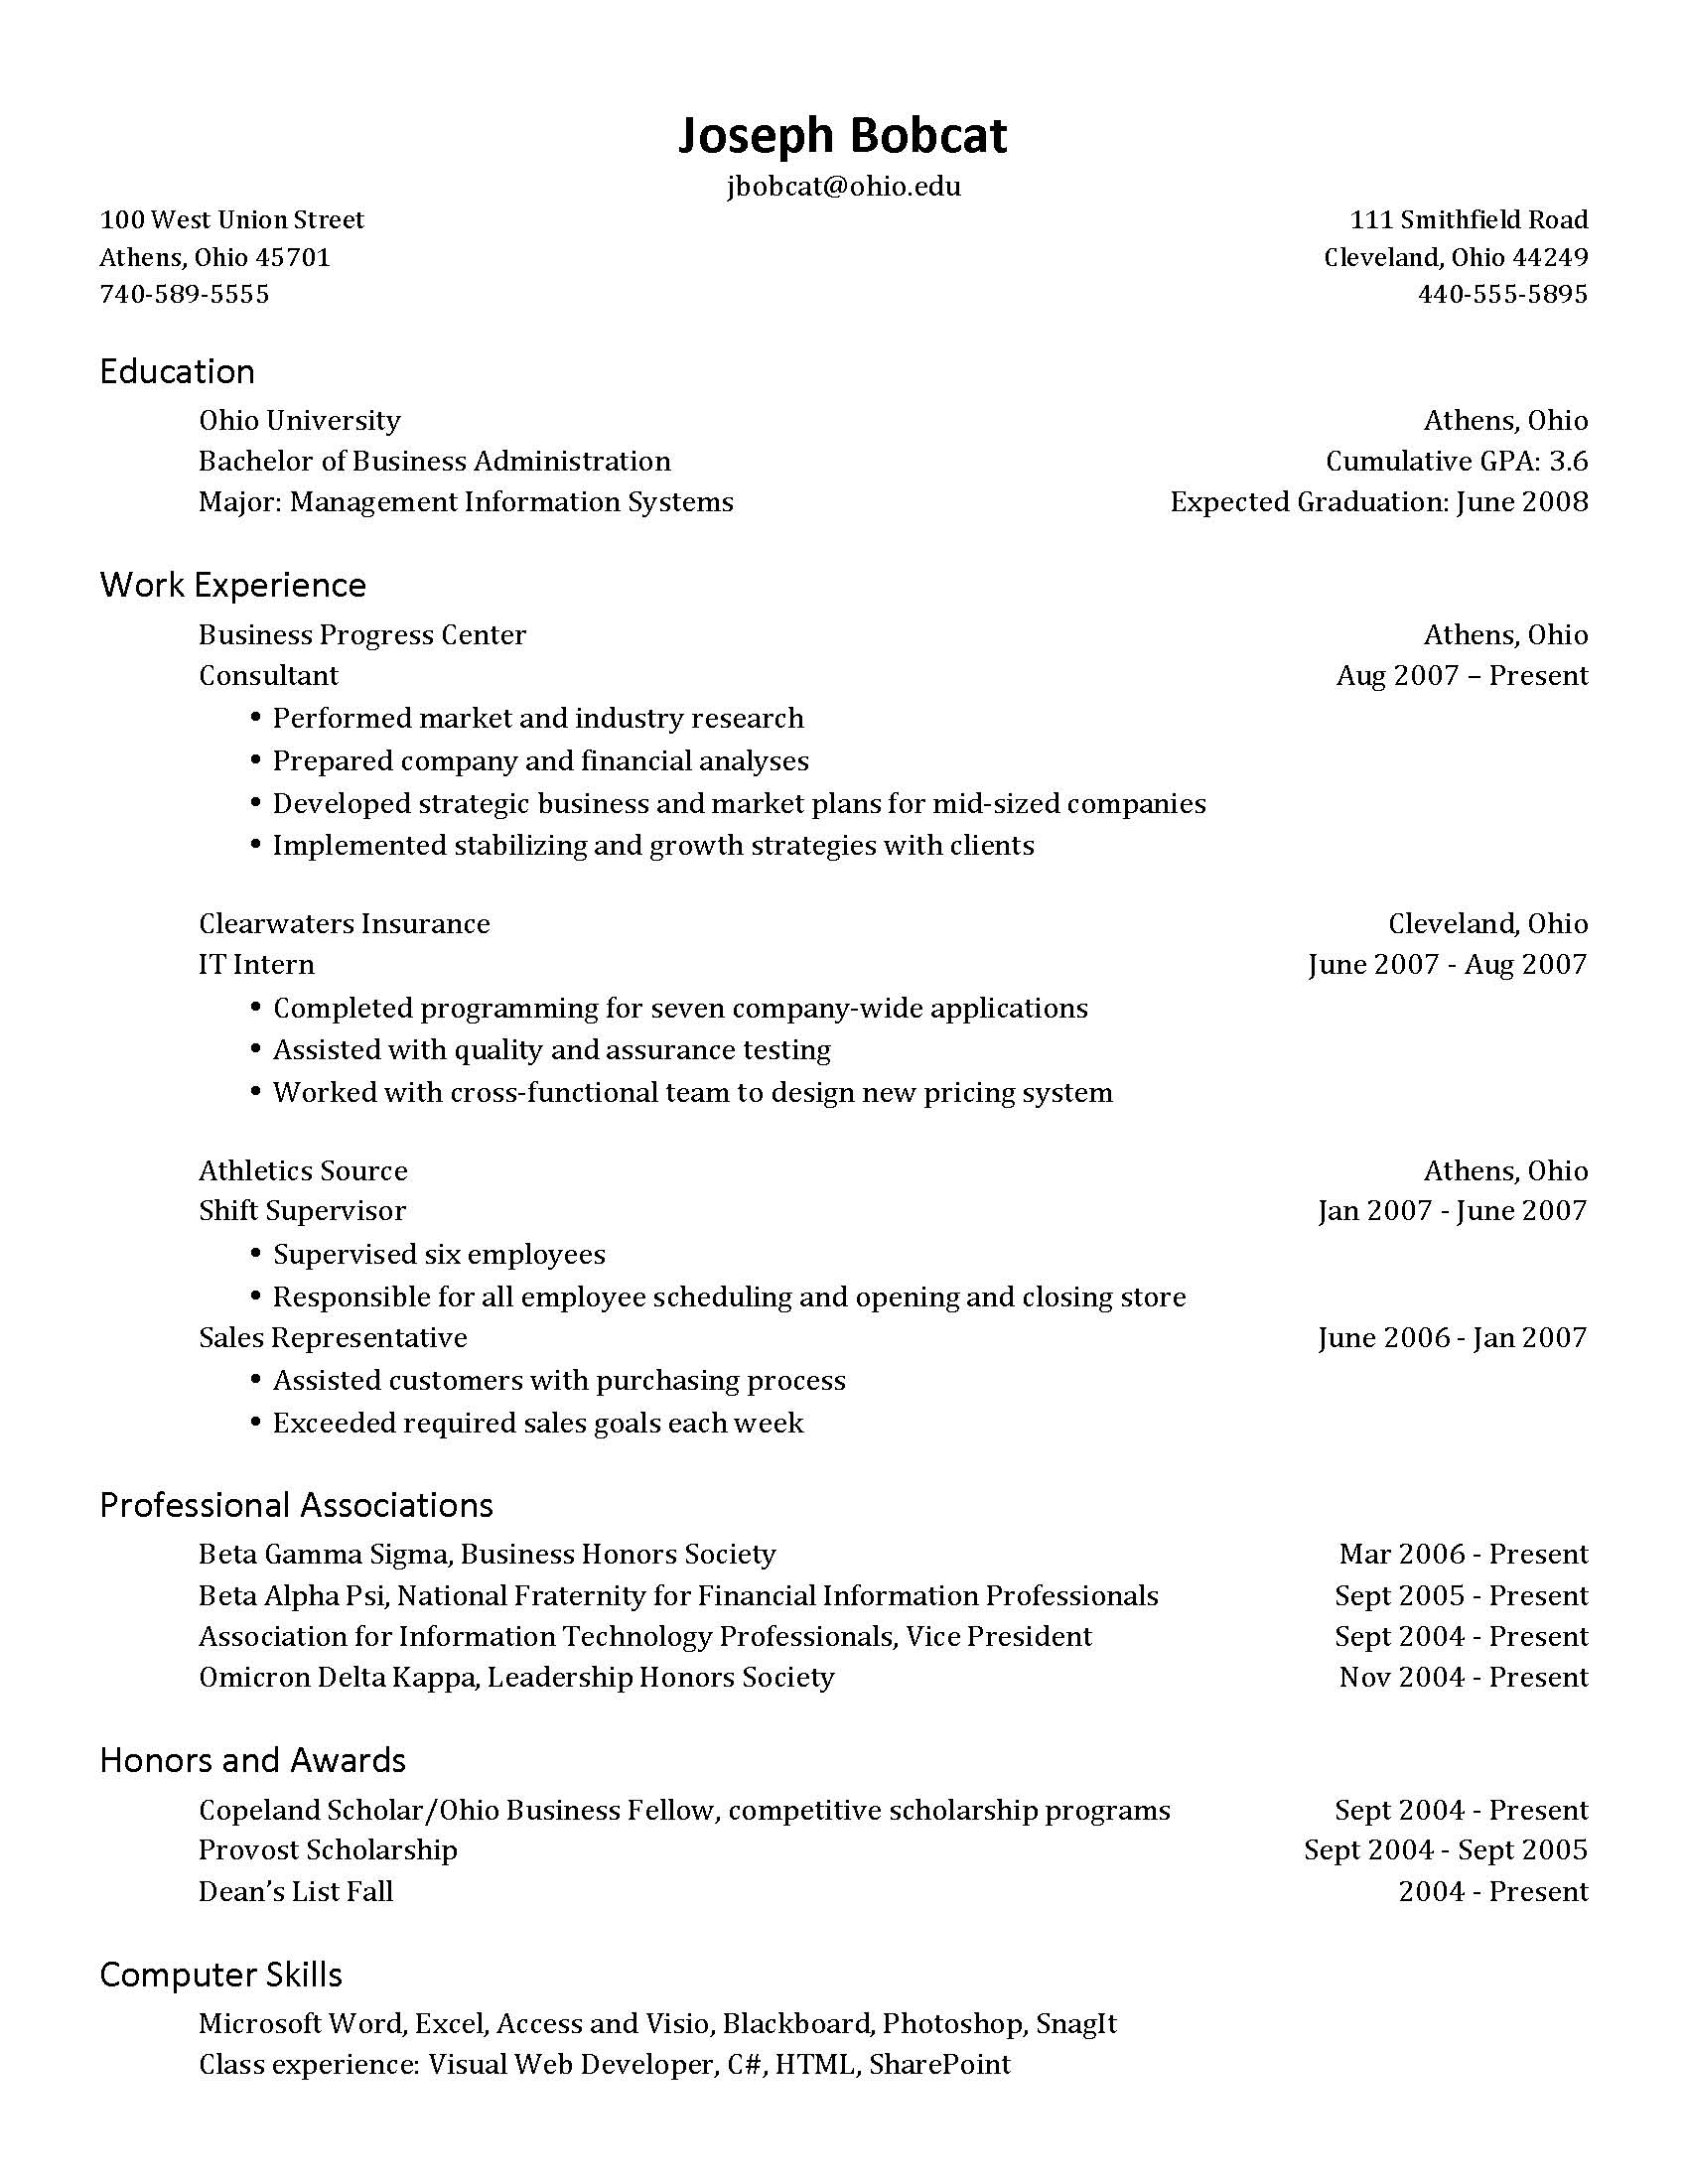 Listing websites on a resume